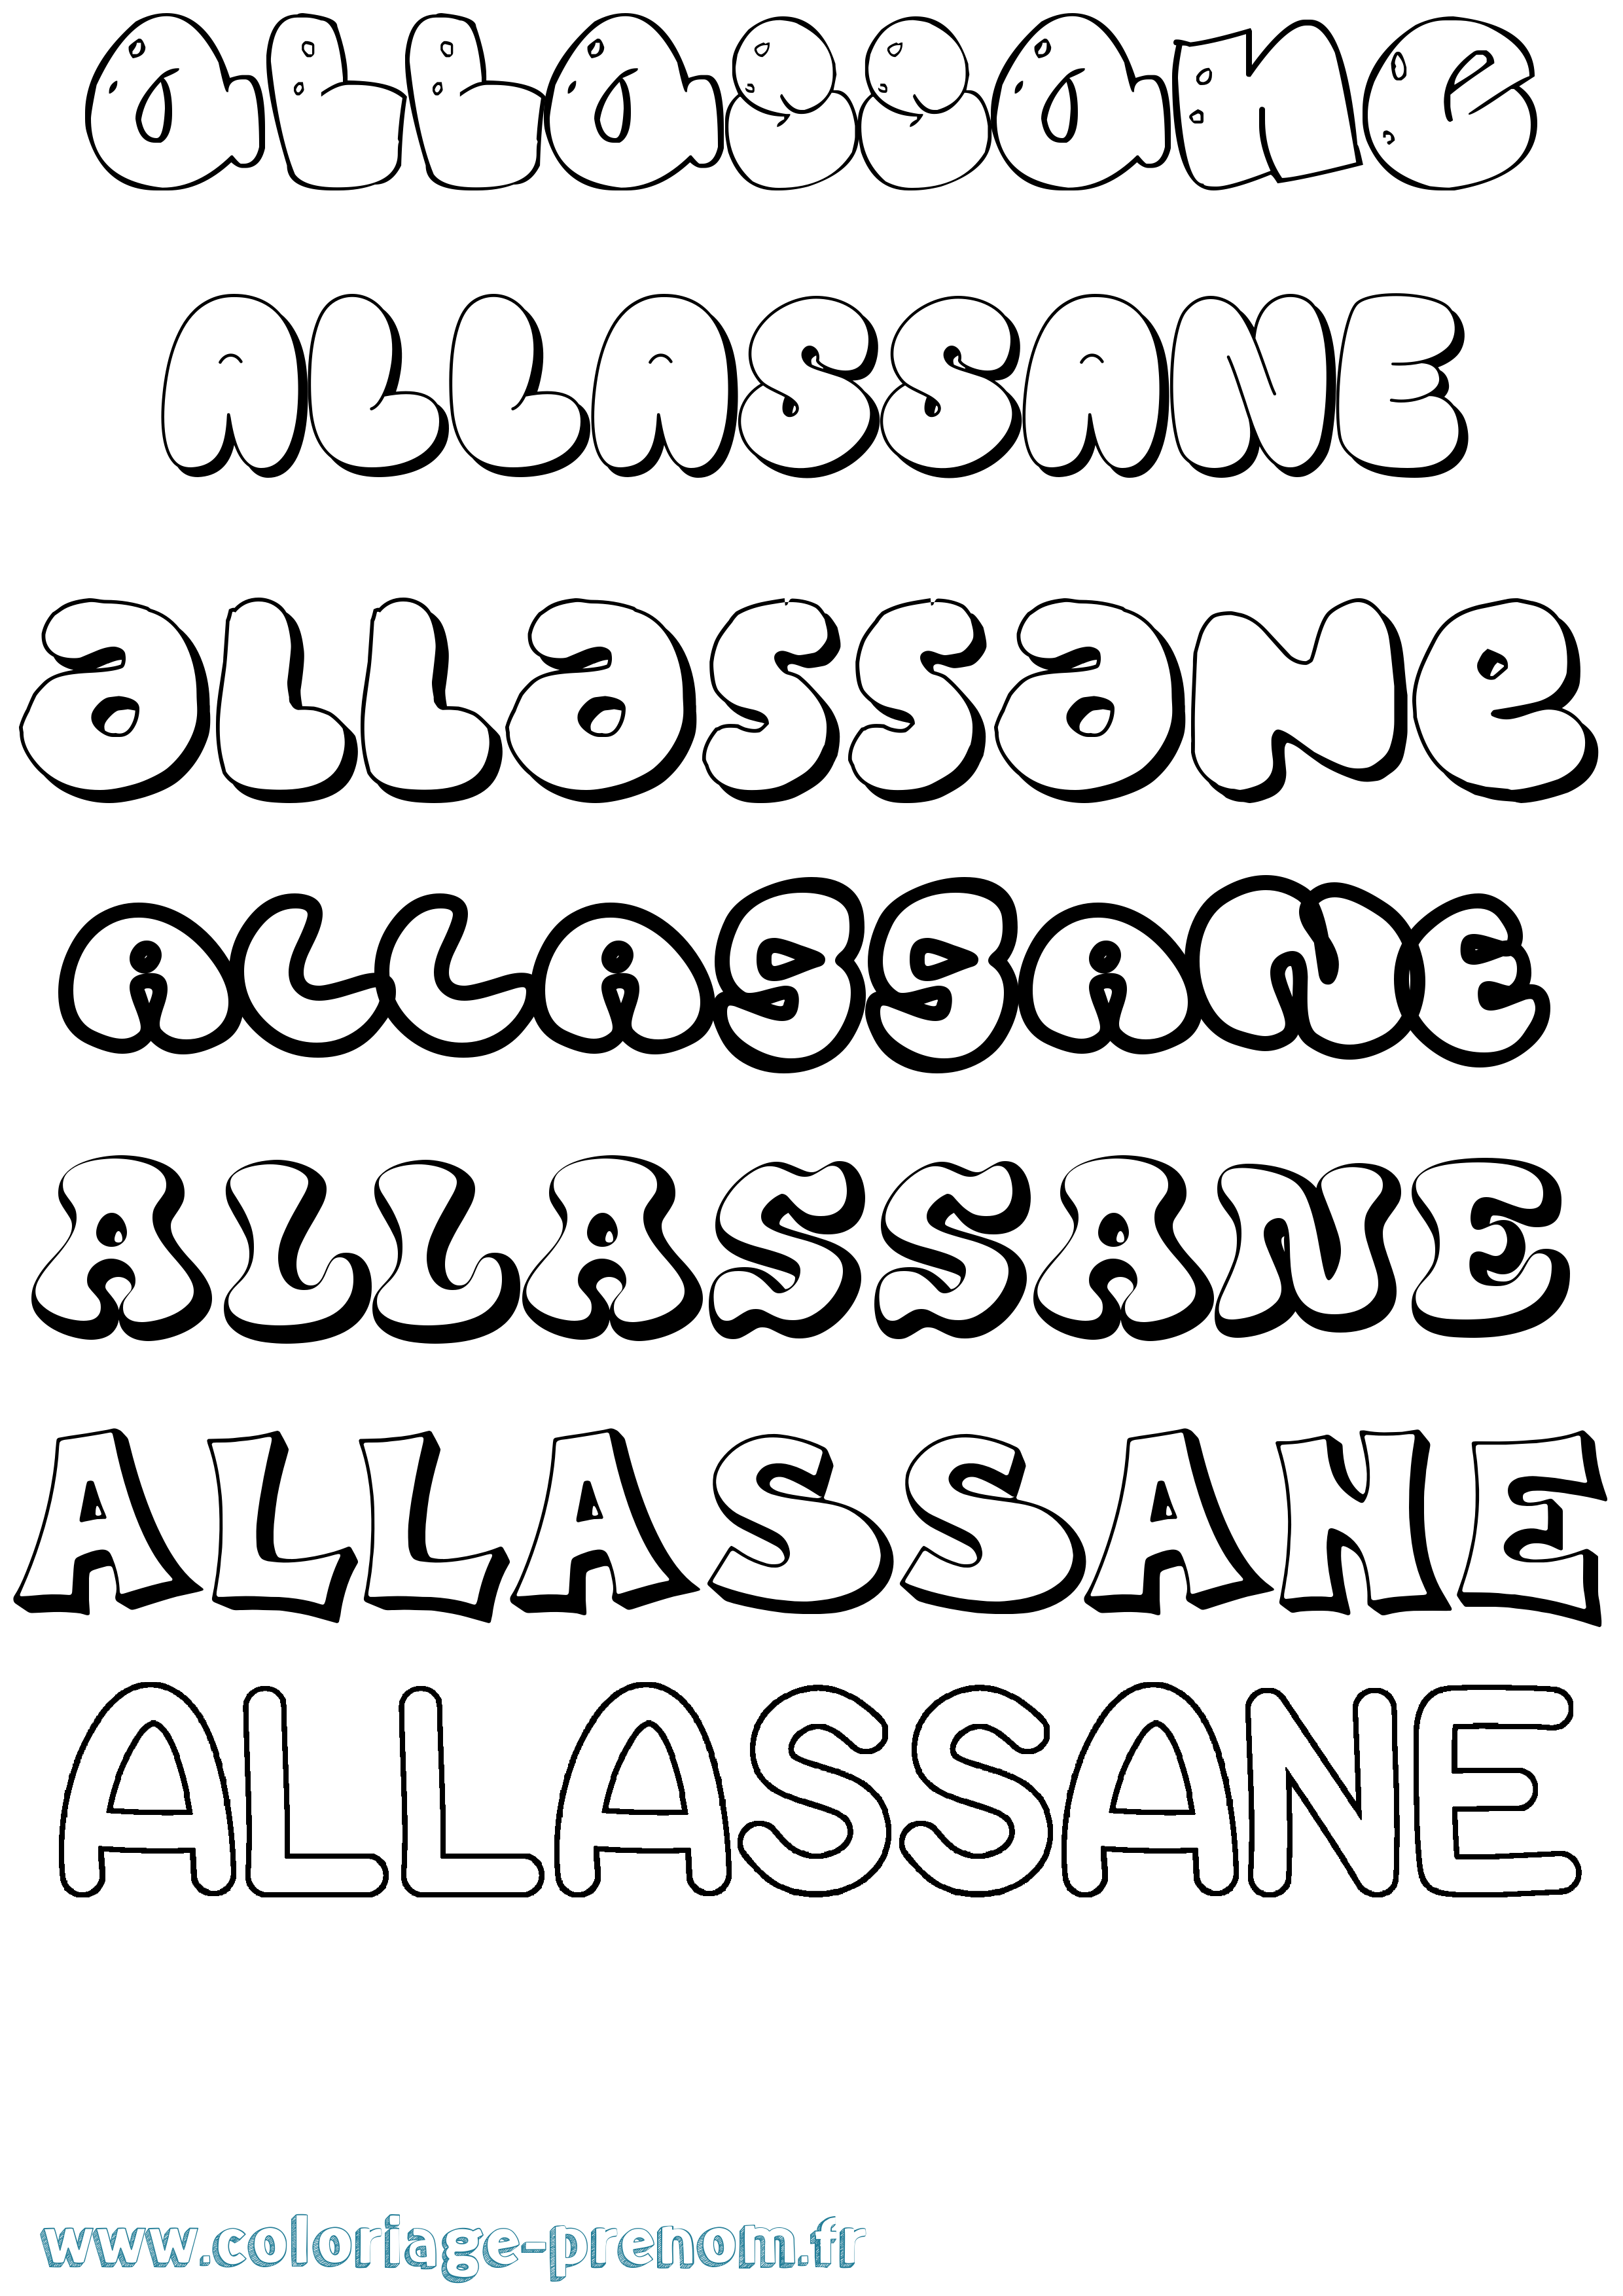 Coloriage prénom Allassane Bubble